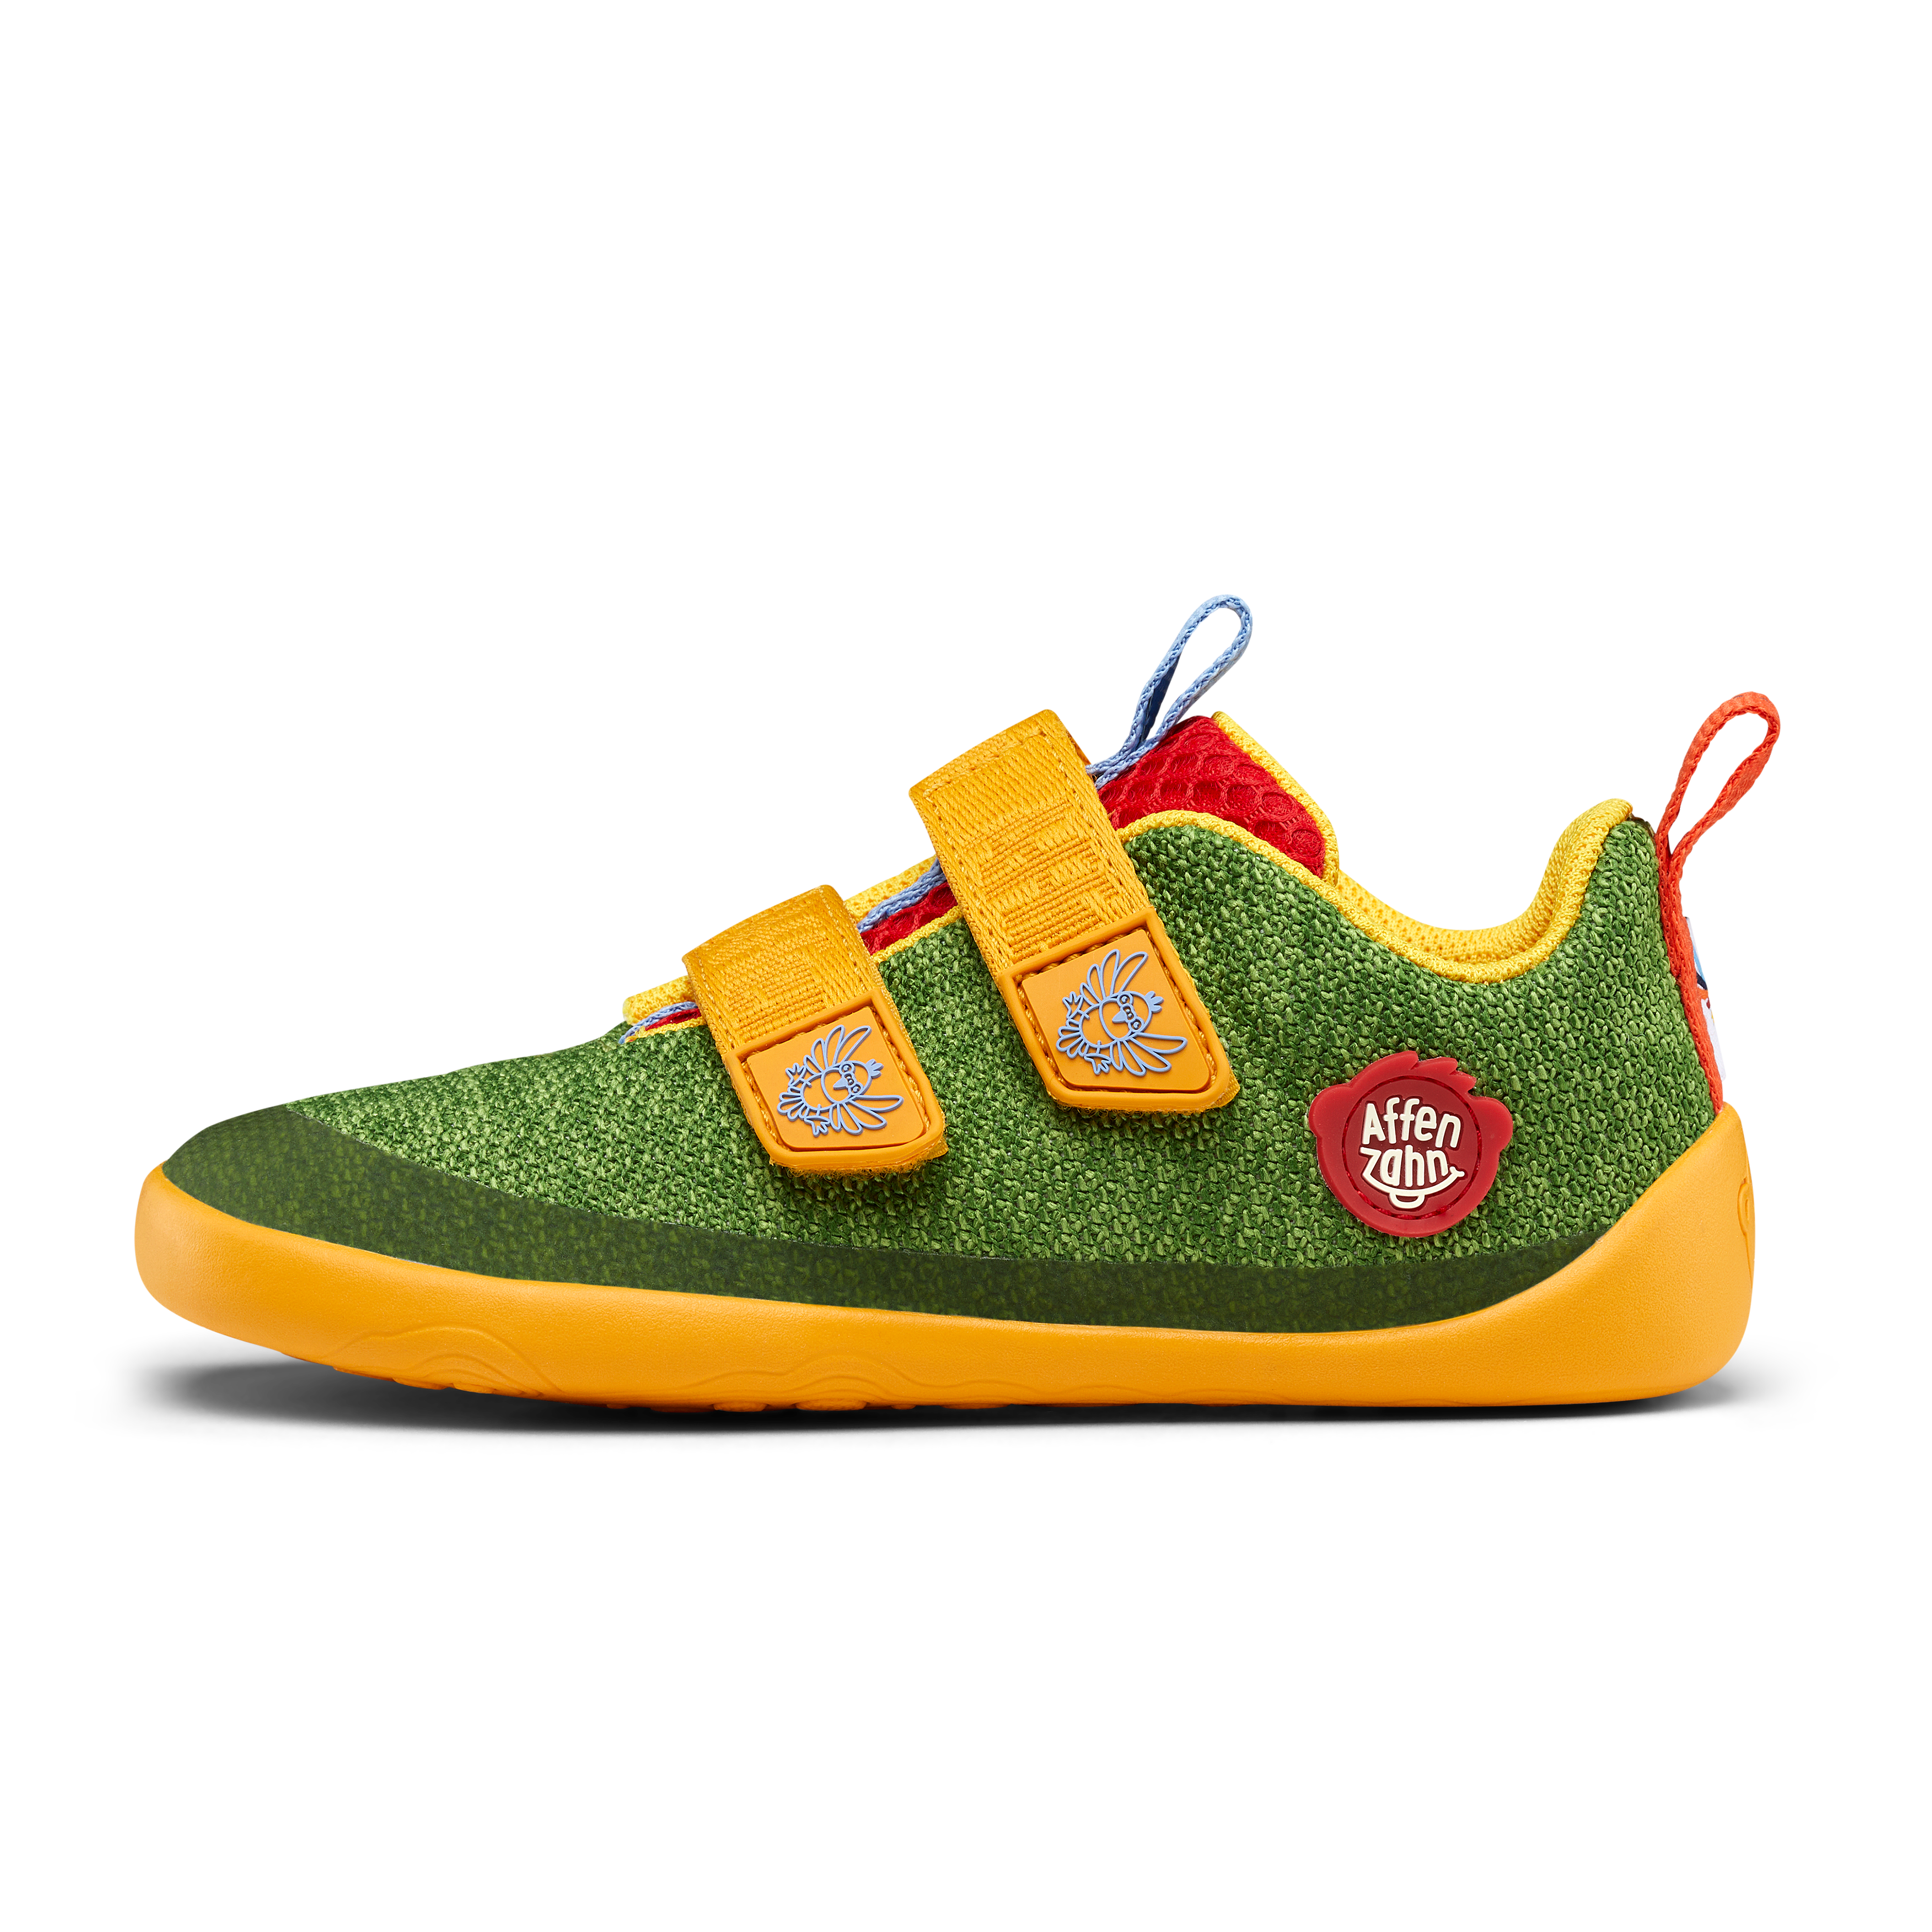 Affenzahn Knit Happy barfods sneakers til børn i farven bird of paradise, yderside